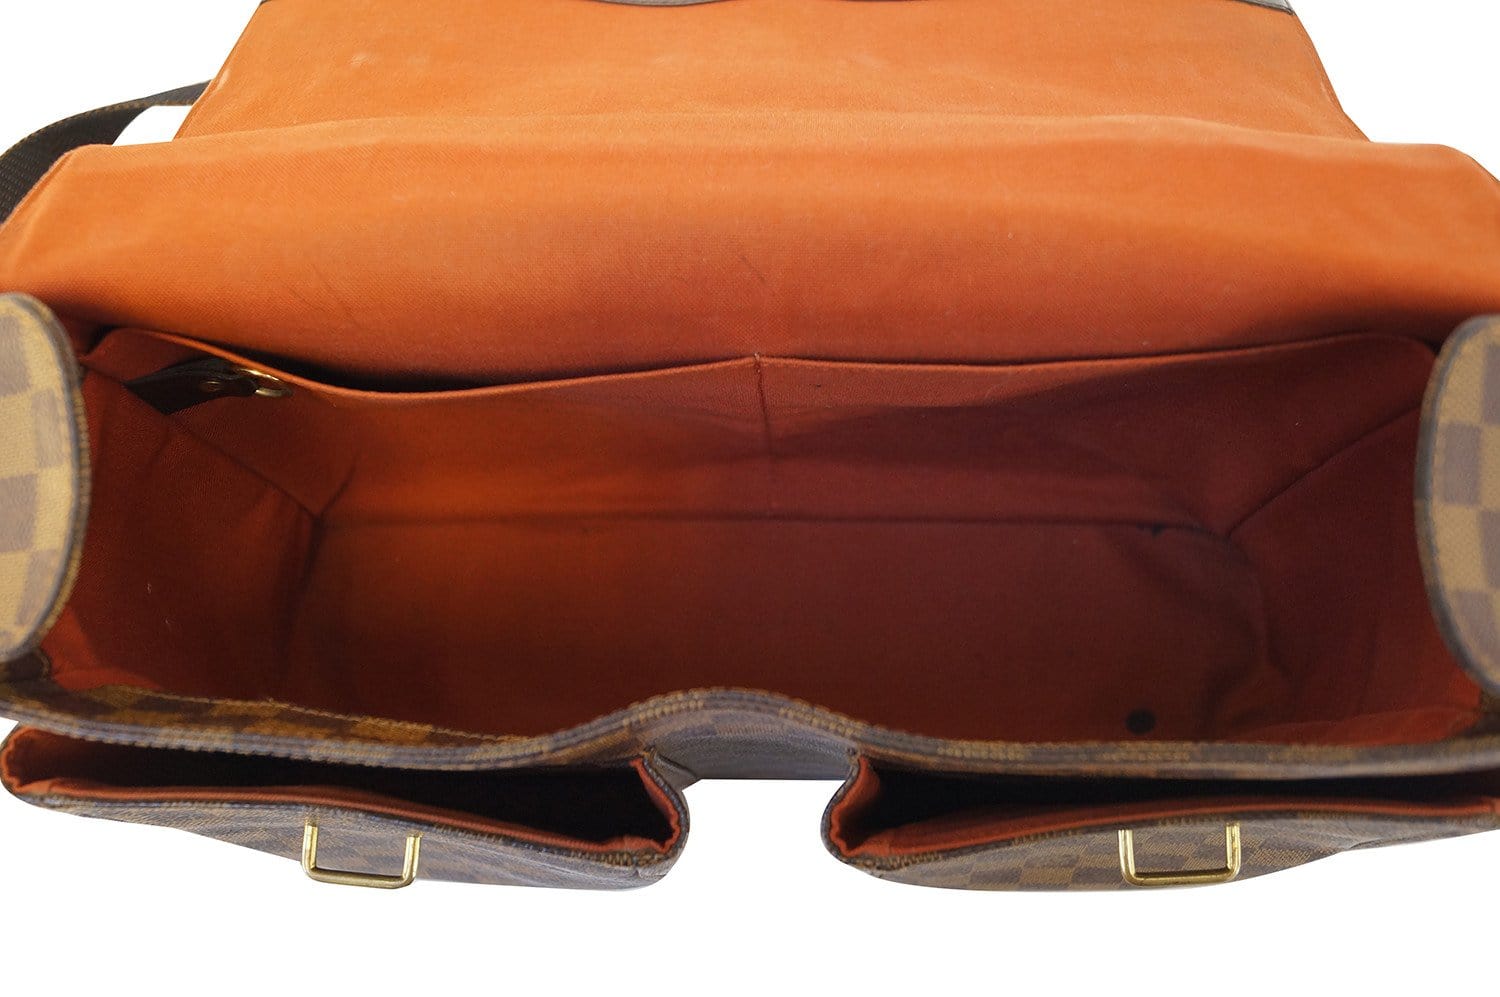 Louis-Vuitton-Damier-Broad-Way-2Way-Bag-Brief-Case-N42270 – dct